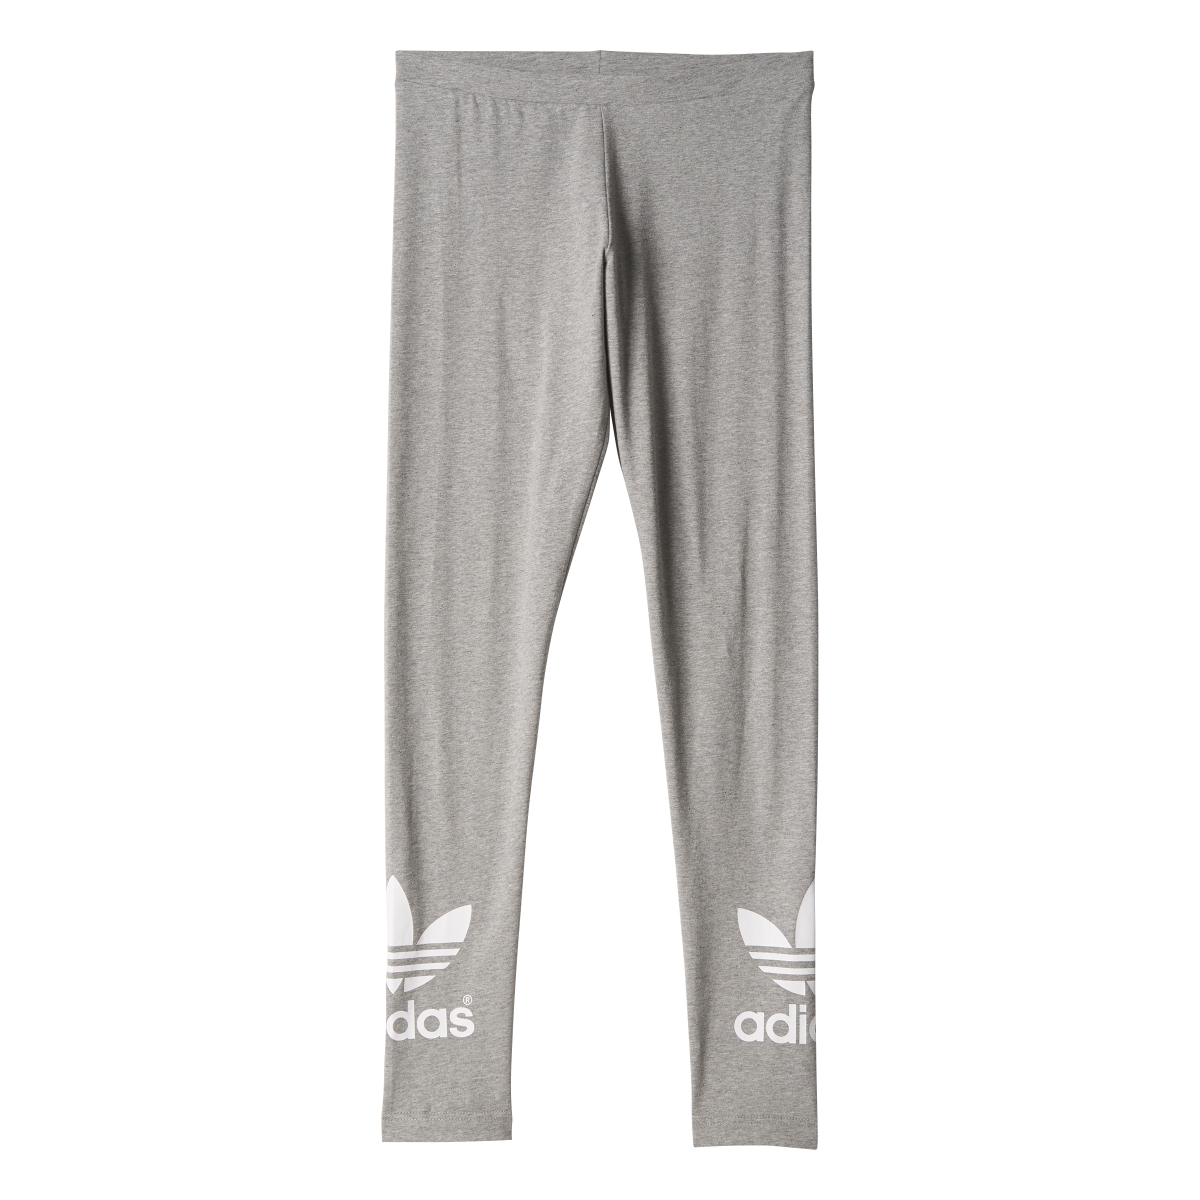 grey and white adidas leggings